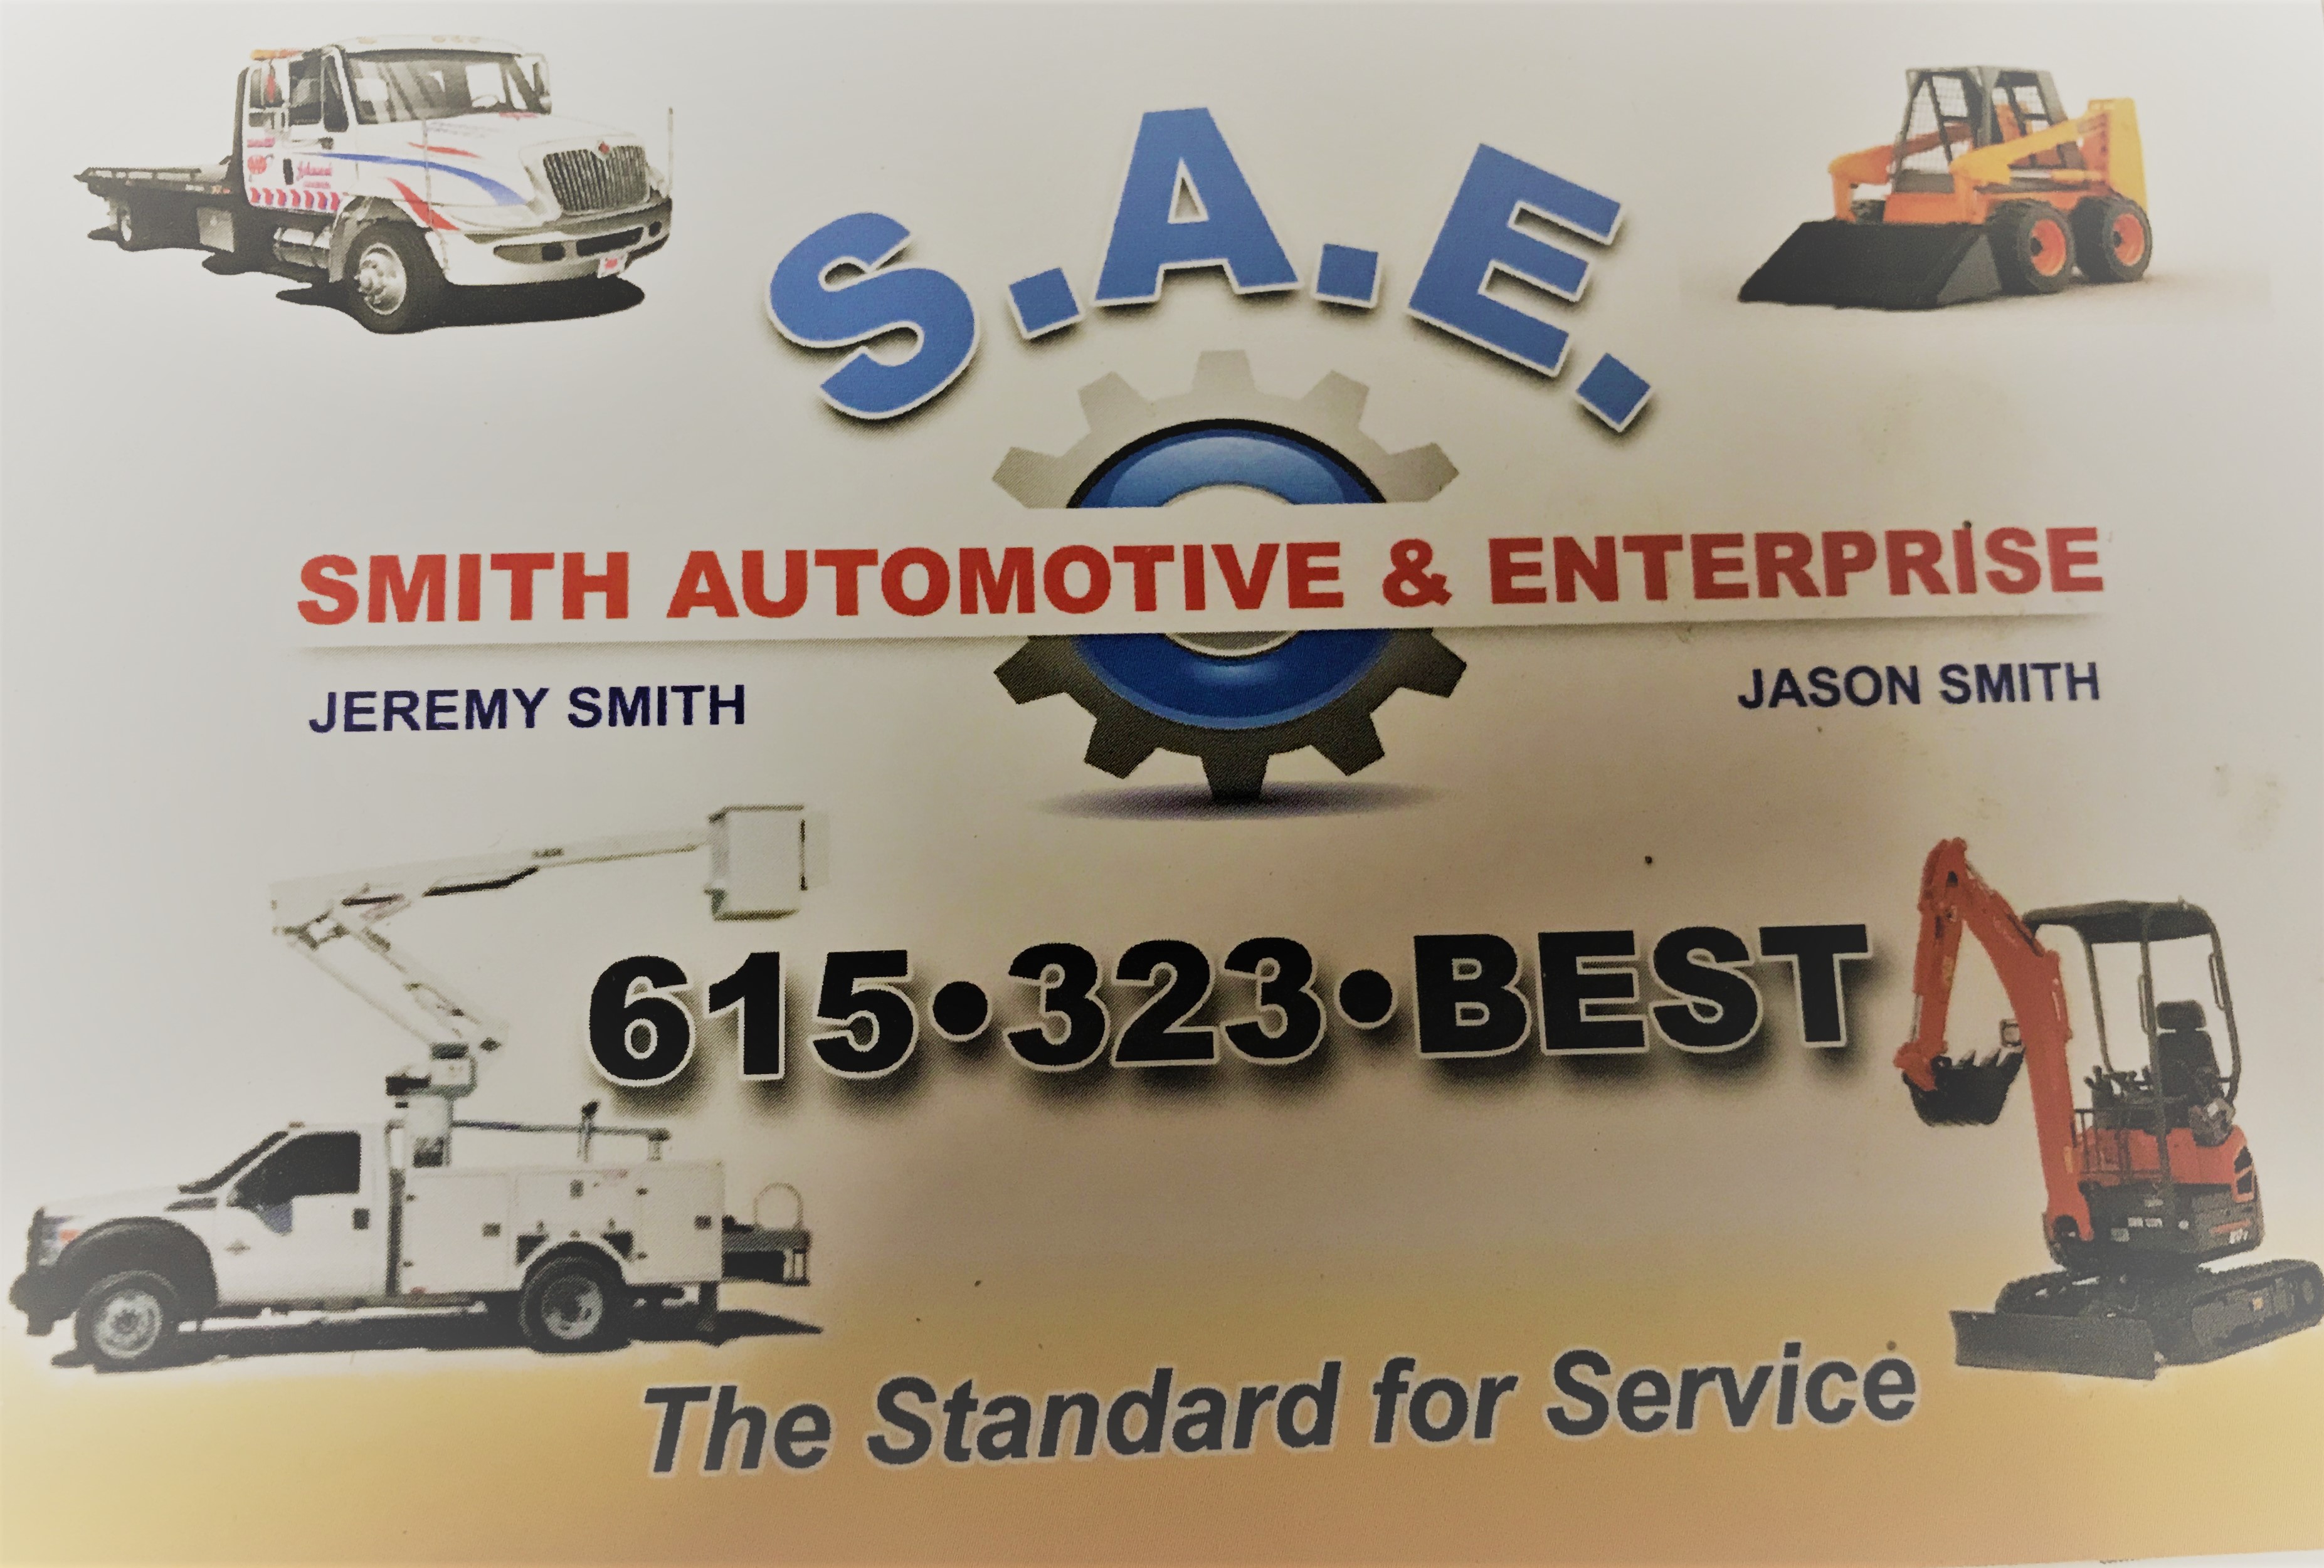 Smith Automotive Enterprise